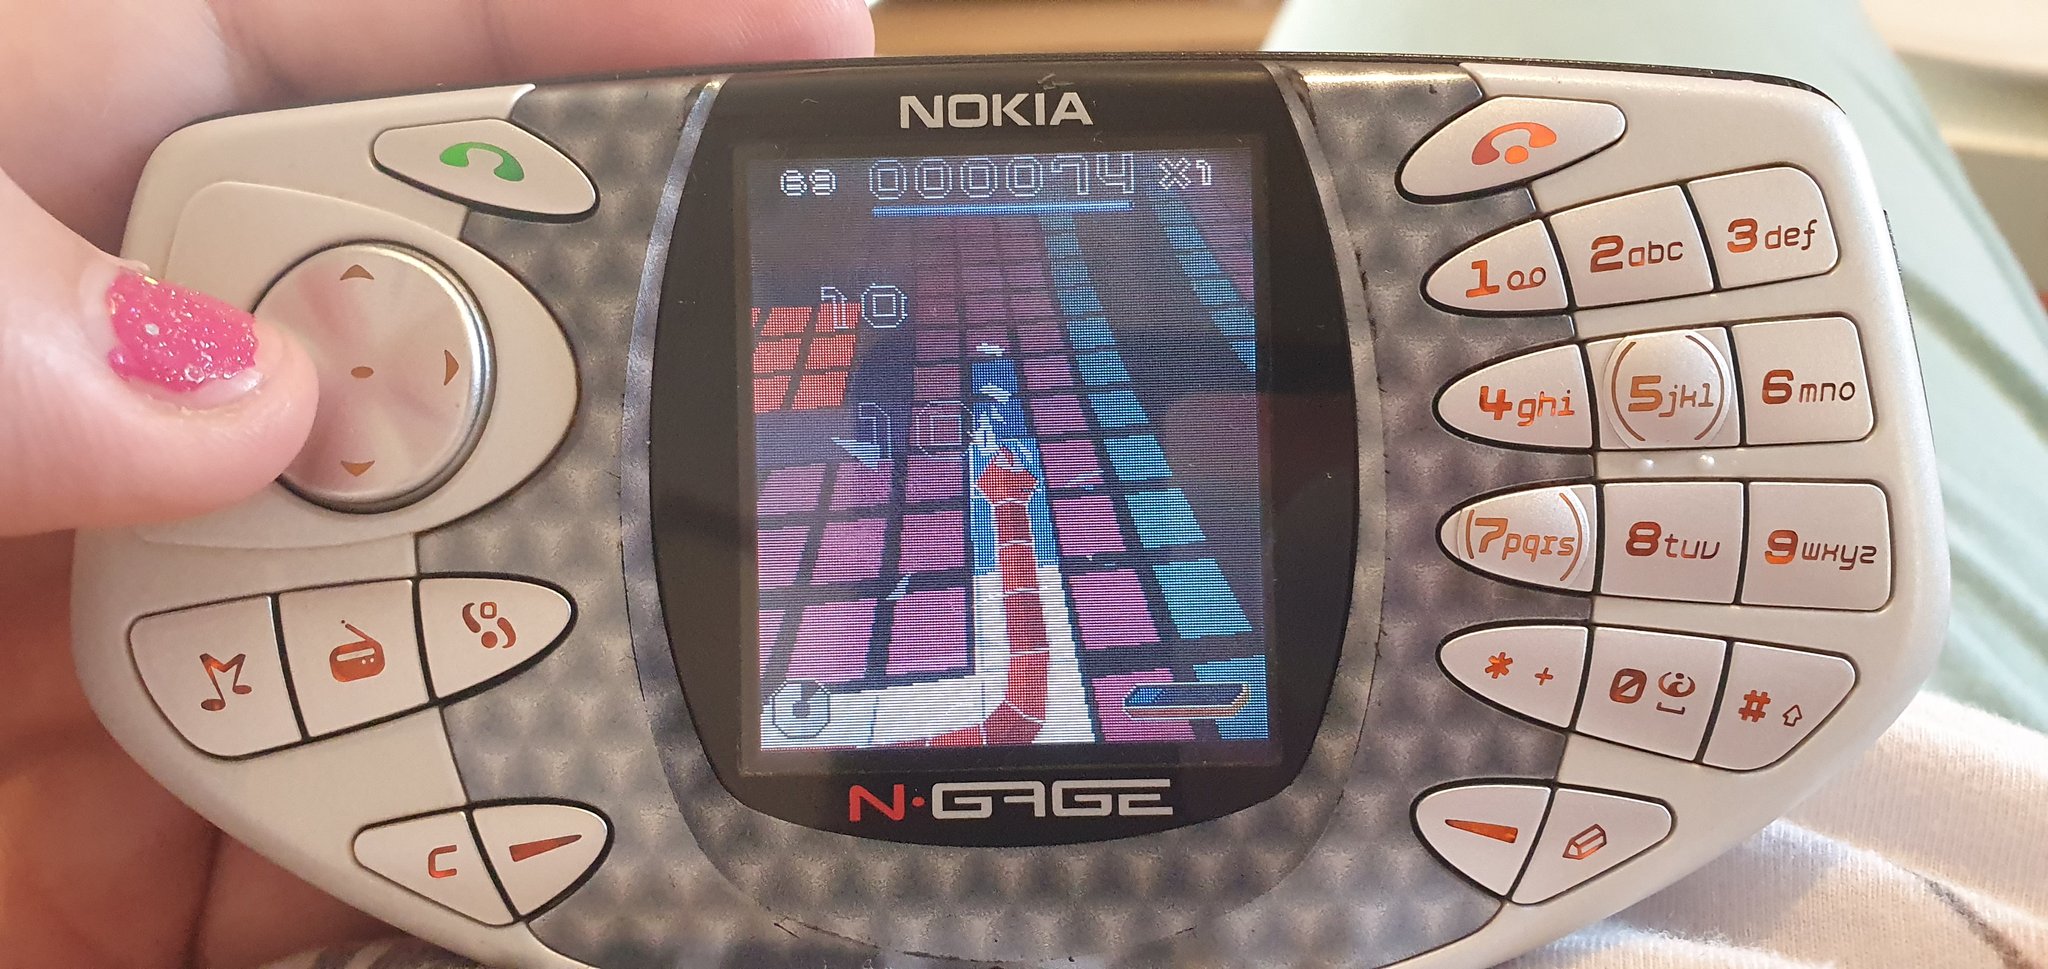 Nokia's Snake game available on Messenger - The Statesman